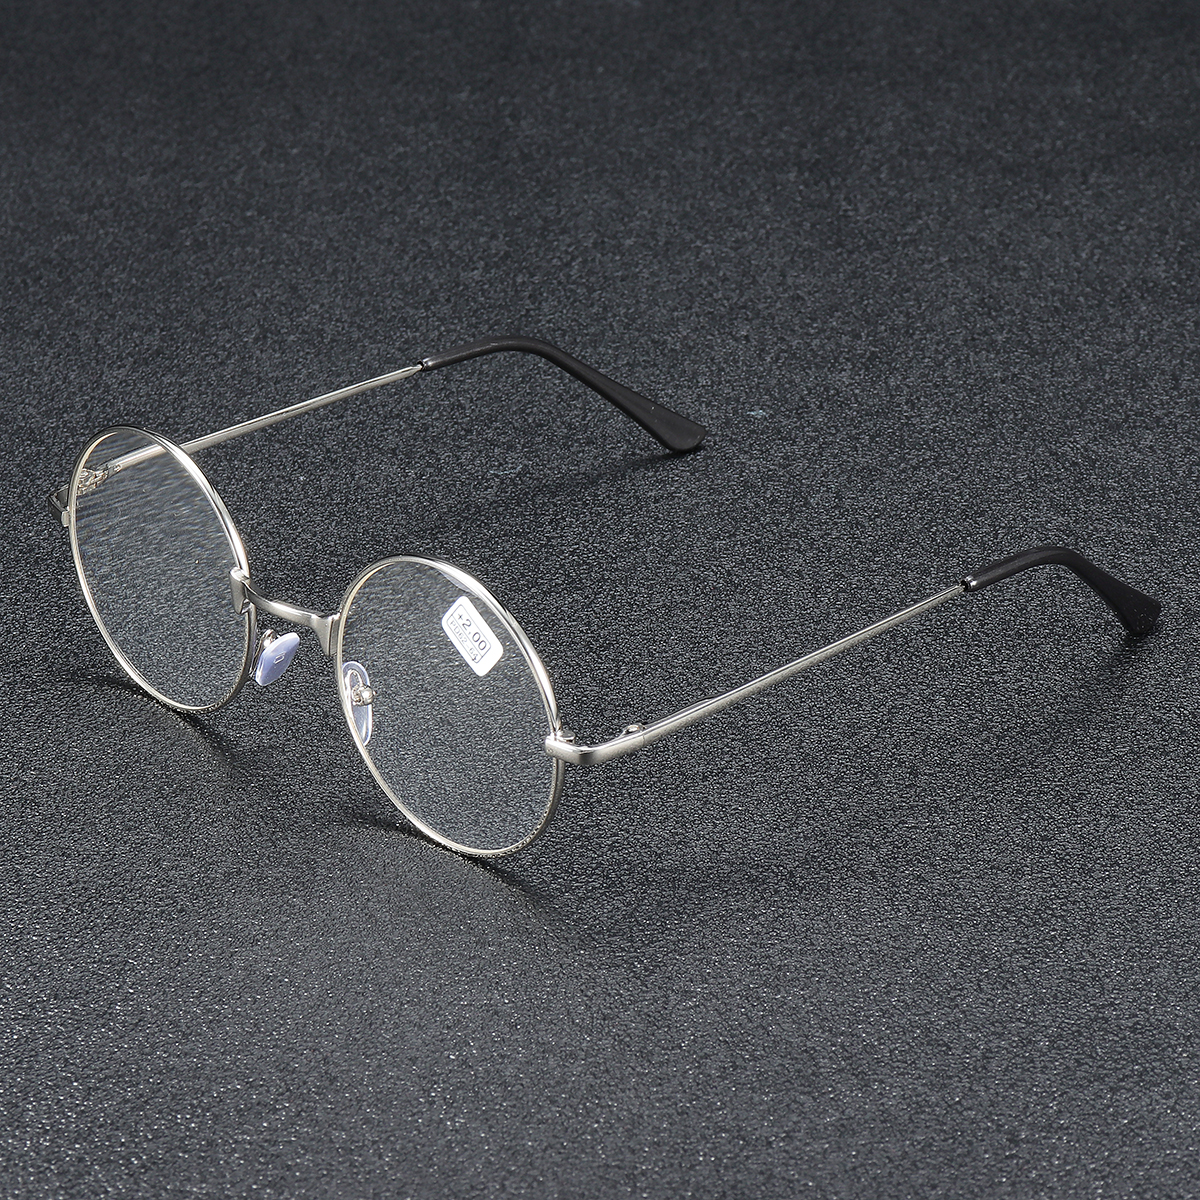 Minleaf-Round-Metal-Frame-Presbyopic-Best-Reading-Glasses-Eyeglassess-Fatigue-Relieve-1061478